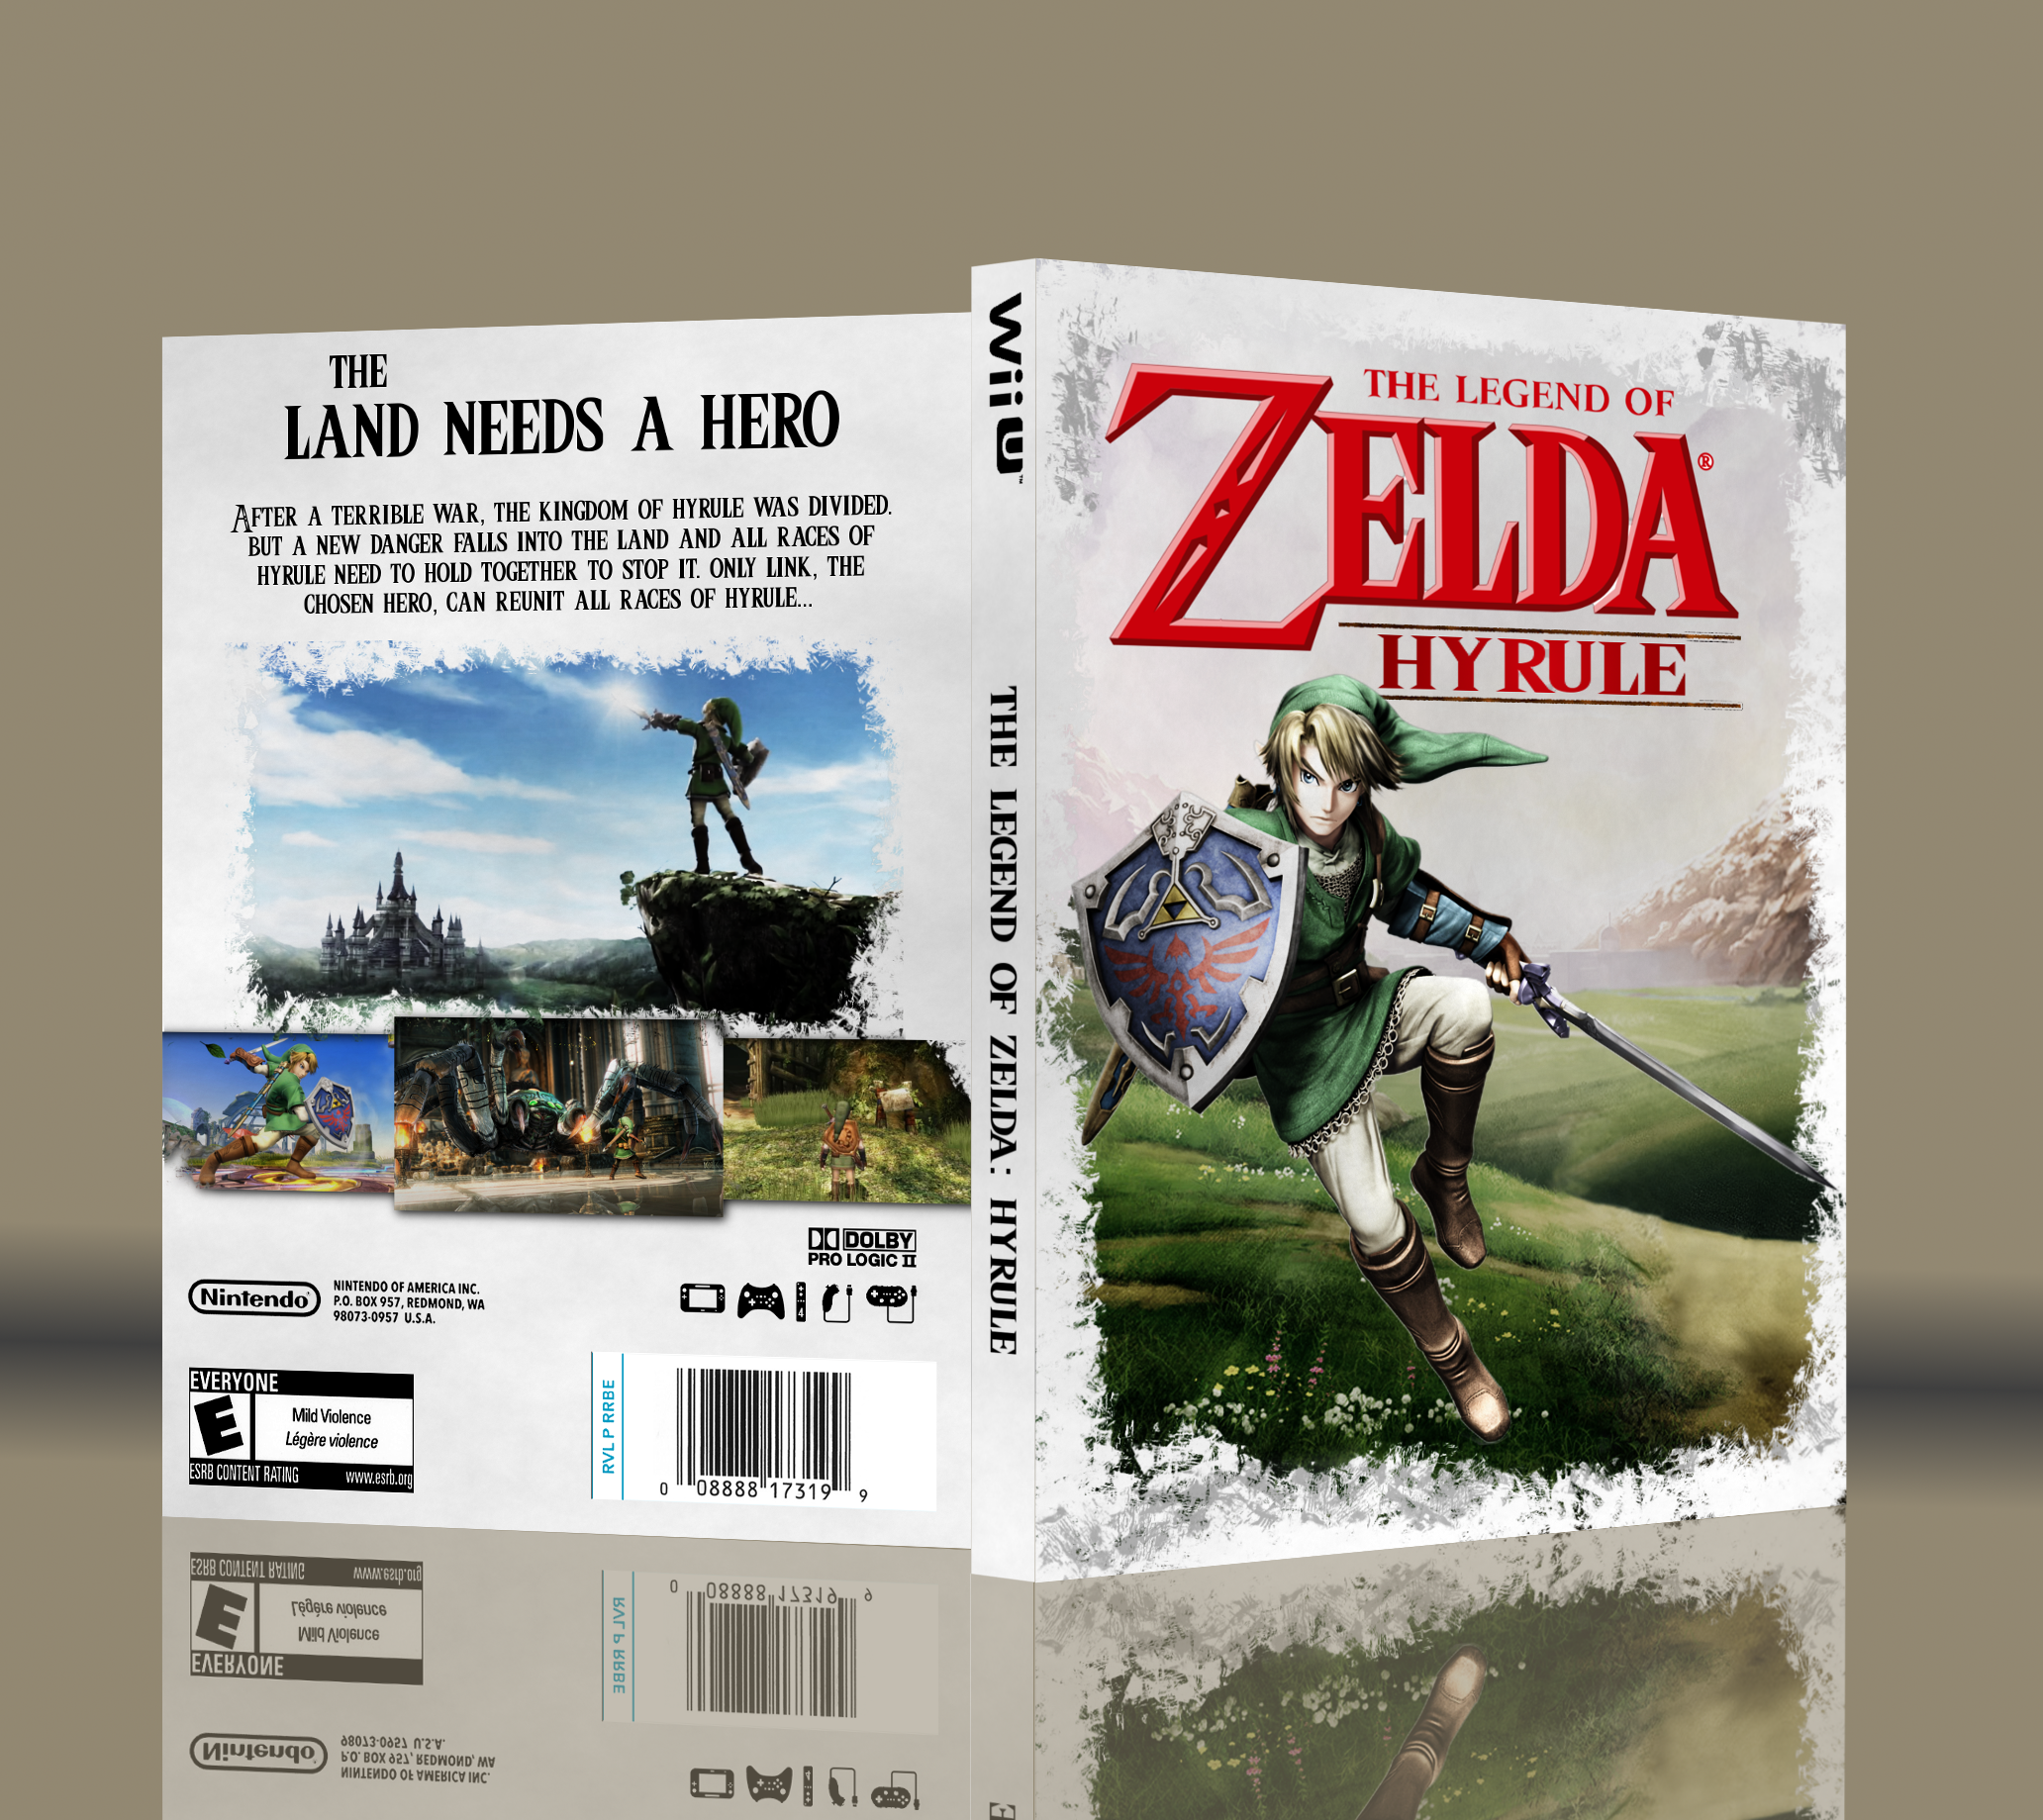 The Legend of Zelda: Hyrule box cover